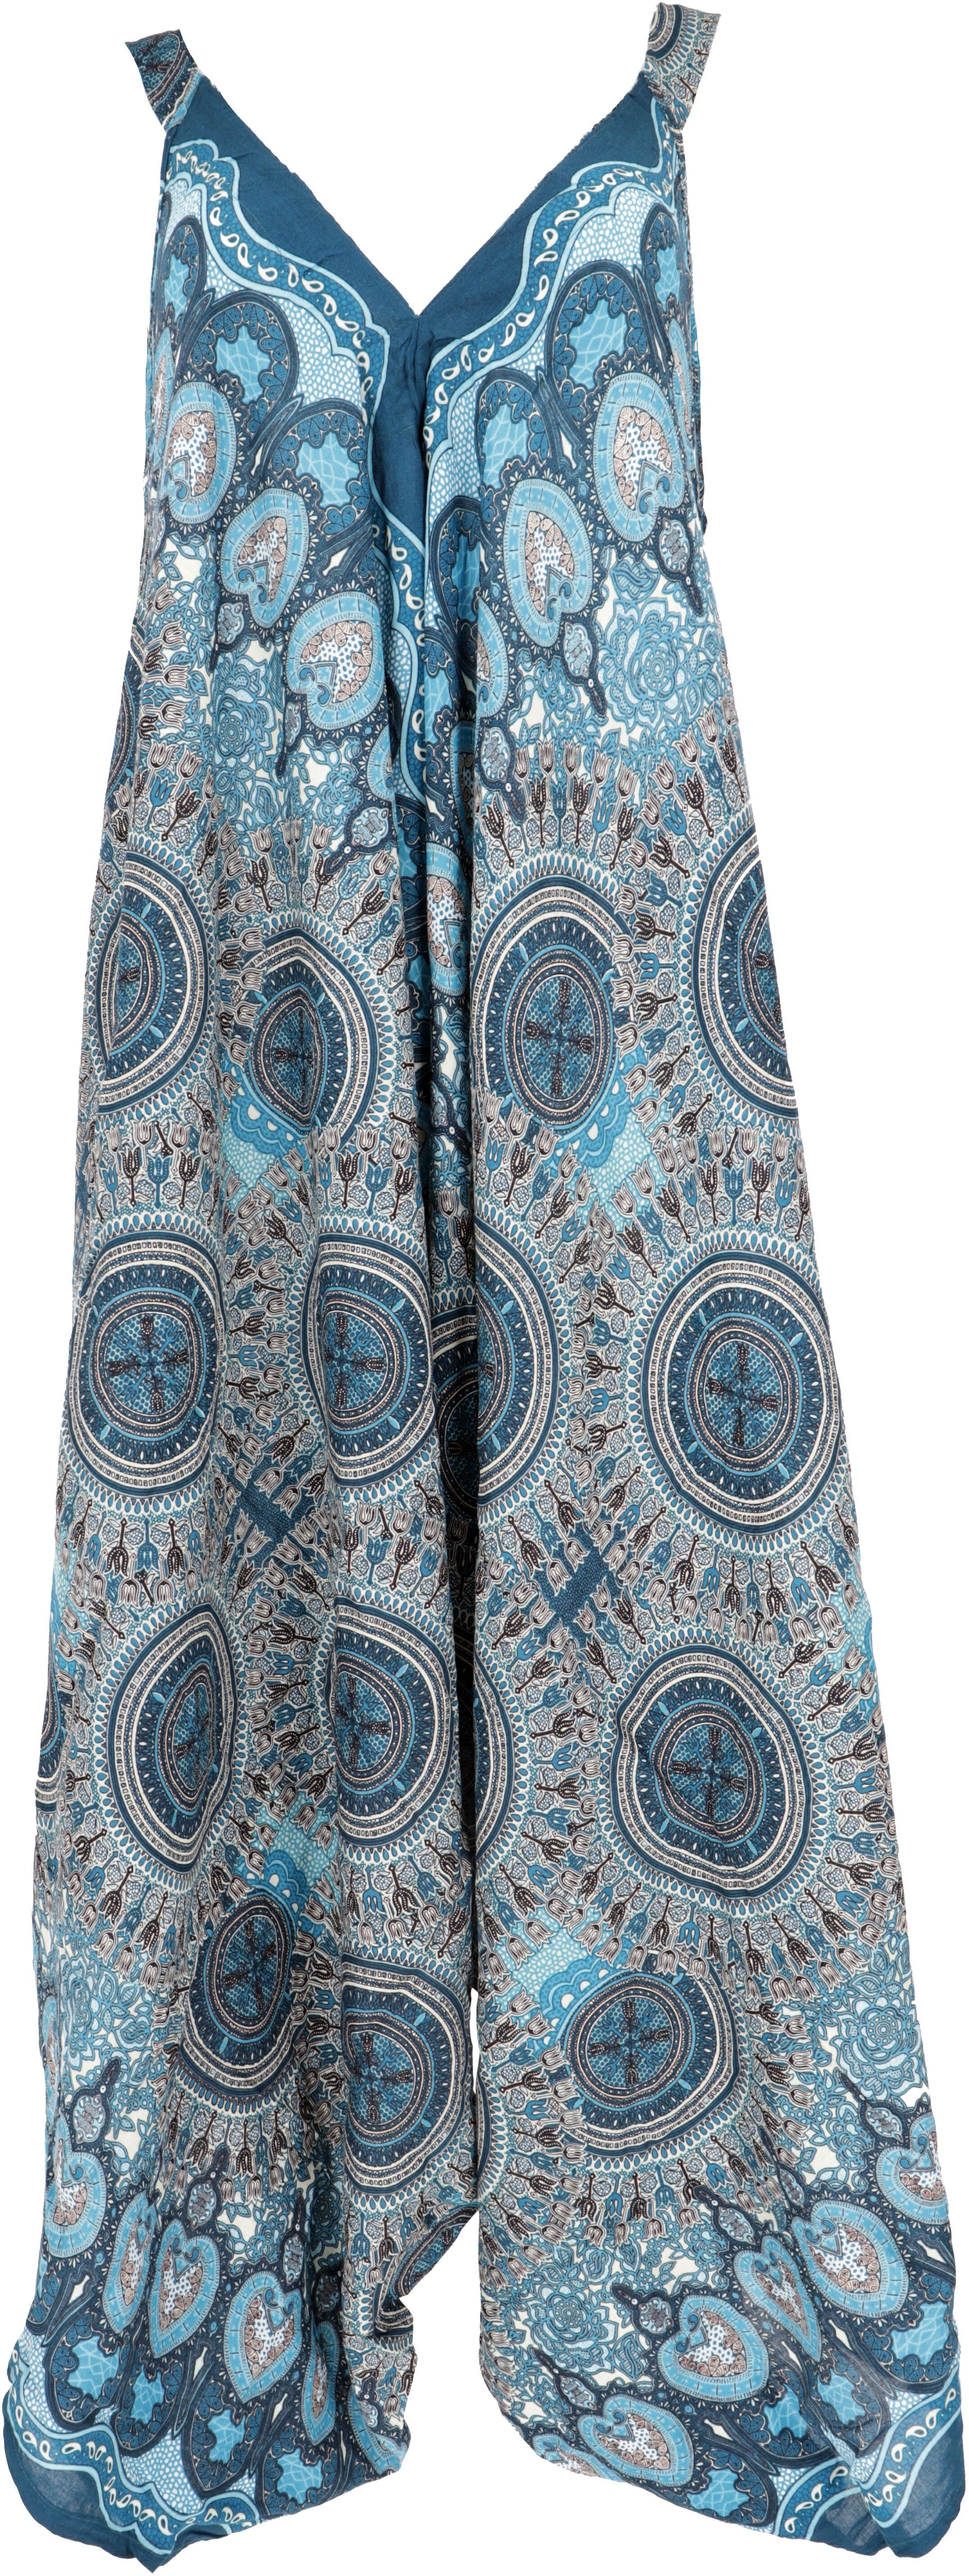 Guru-Shop Relaxhose Boho Jumpsuit, Mandala Sommer Overall, oversize.. alternative Bekleidung türkisblau/weiß